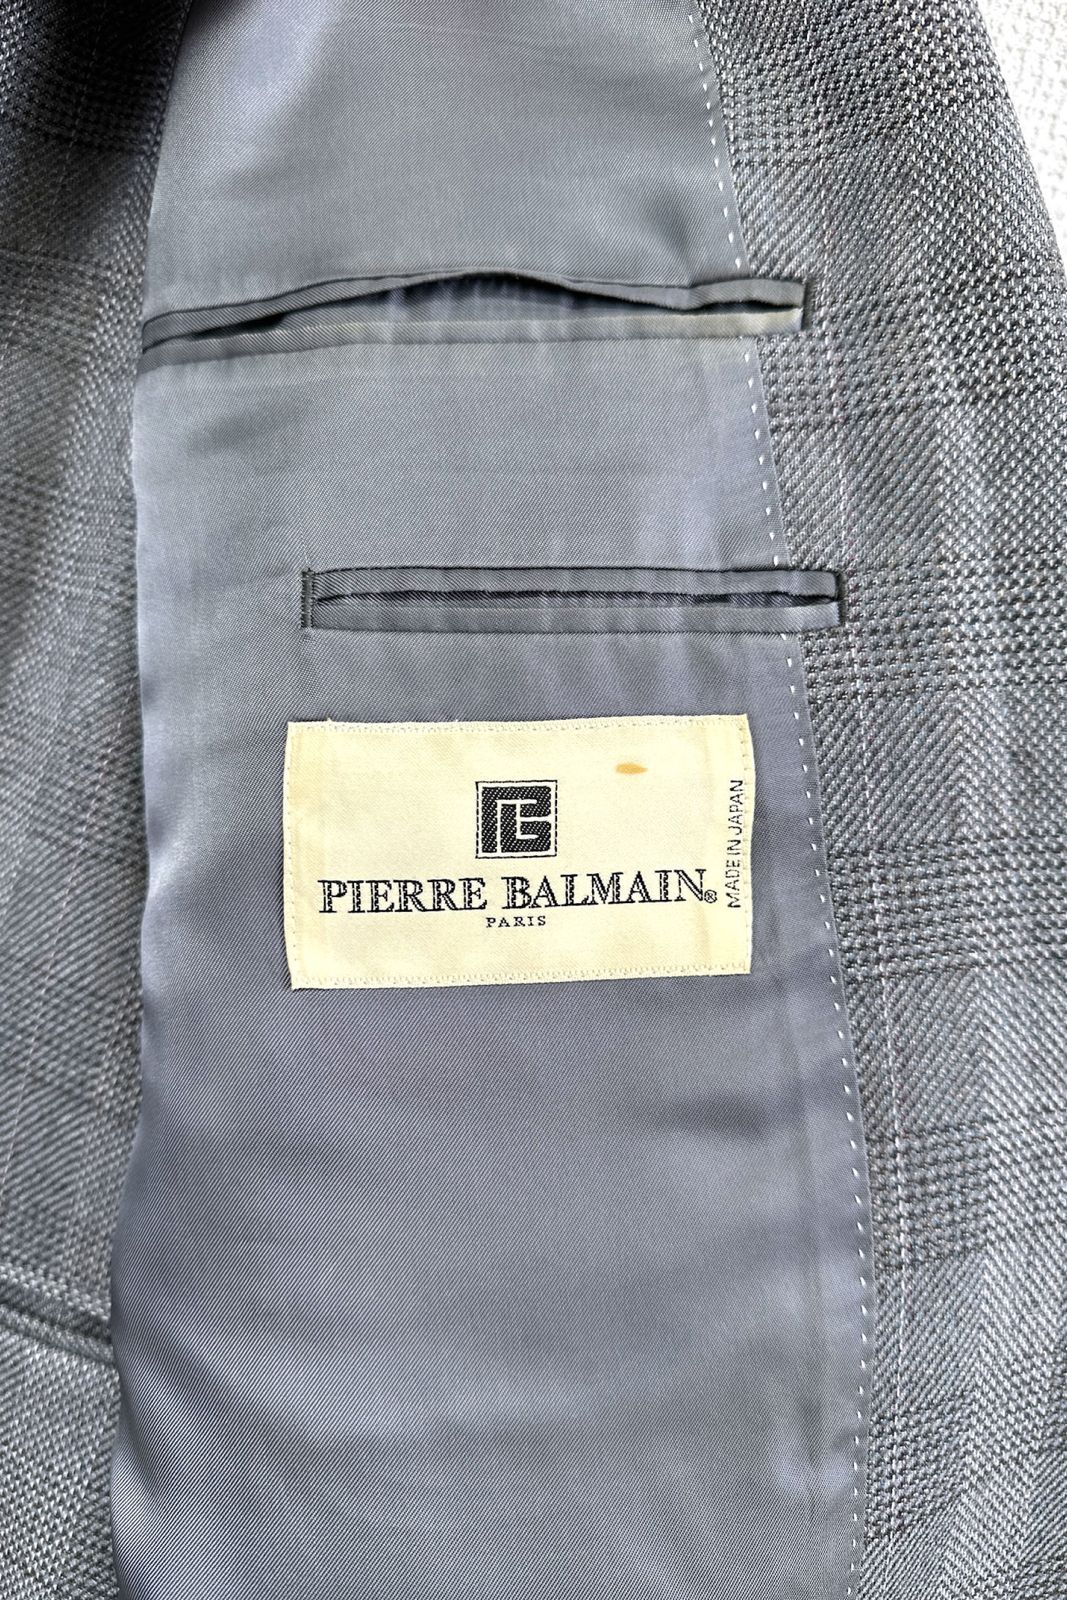 90's PIERRE BALMAIN set up ピエールバルマン スーツ セットアップ 